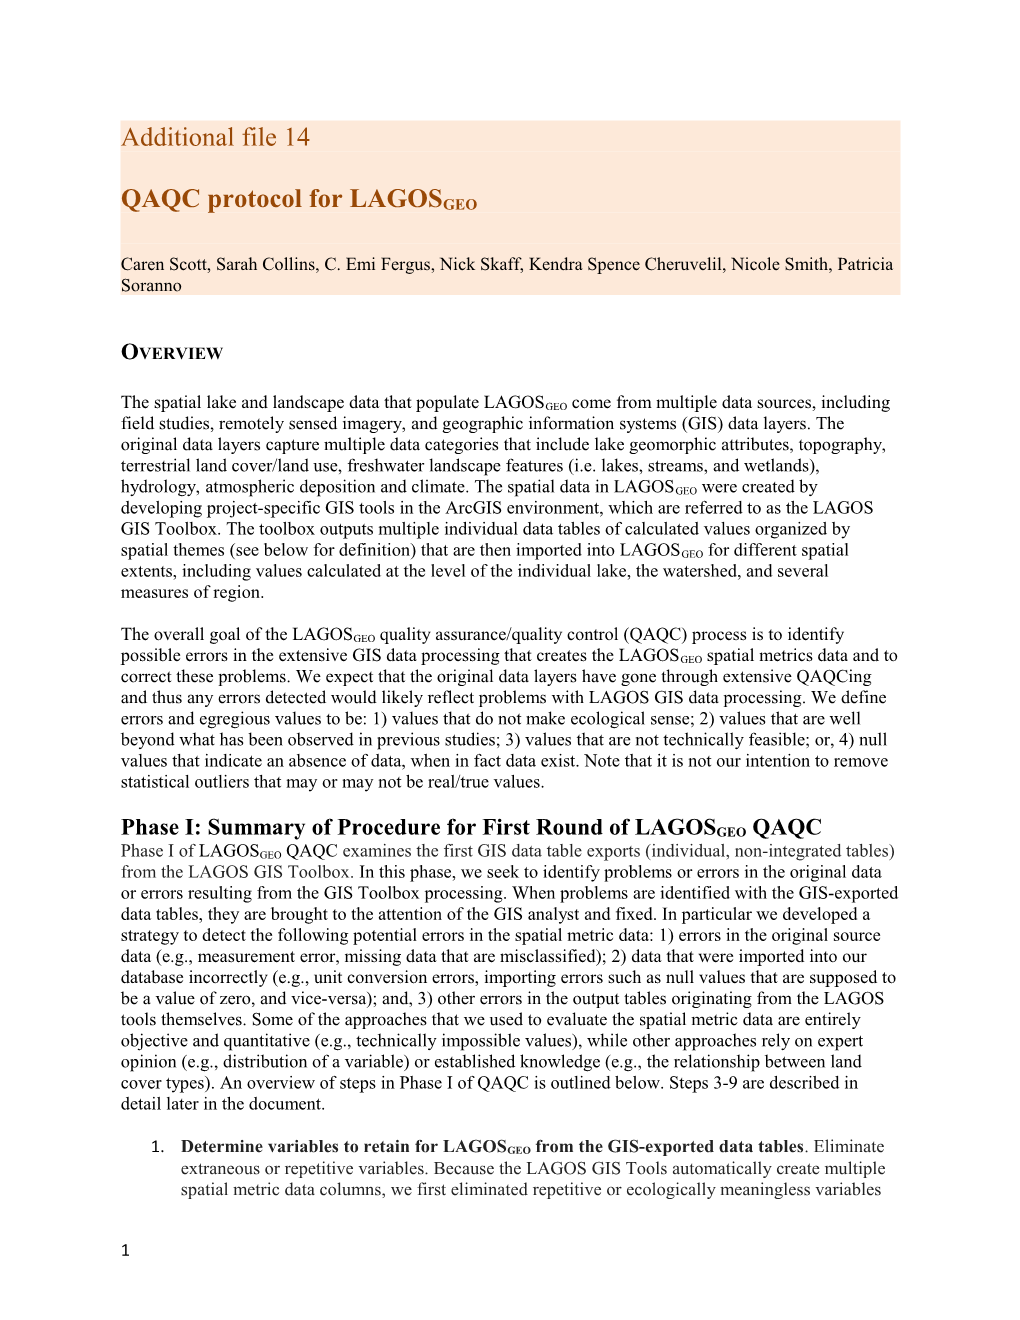 QAQC Protocol for LAGOSGEO